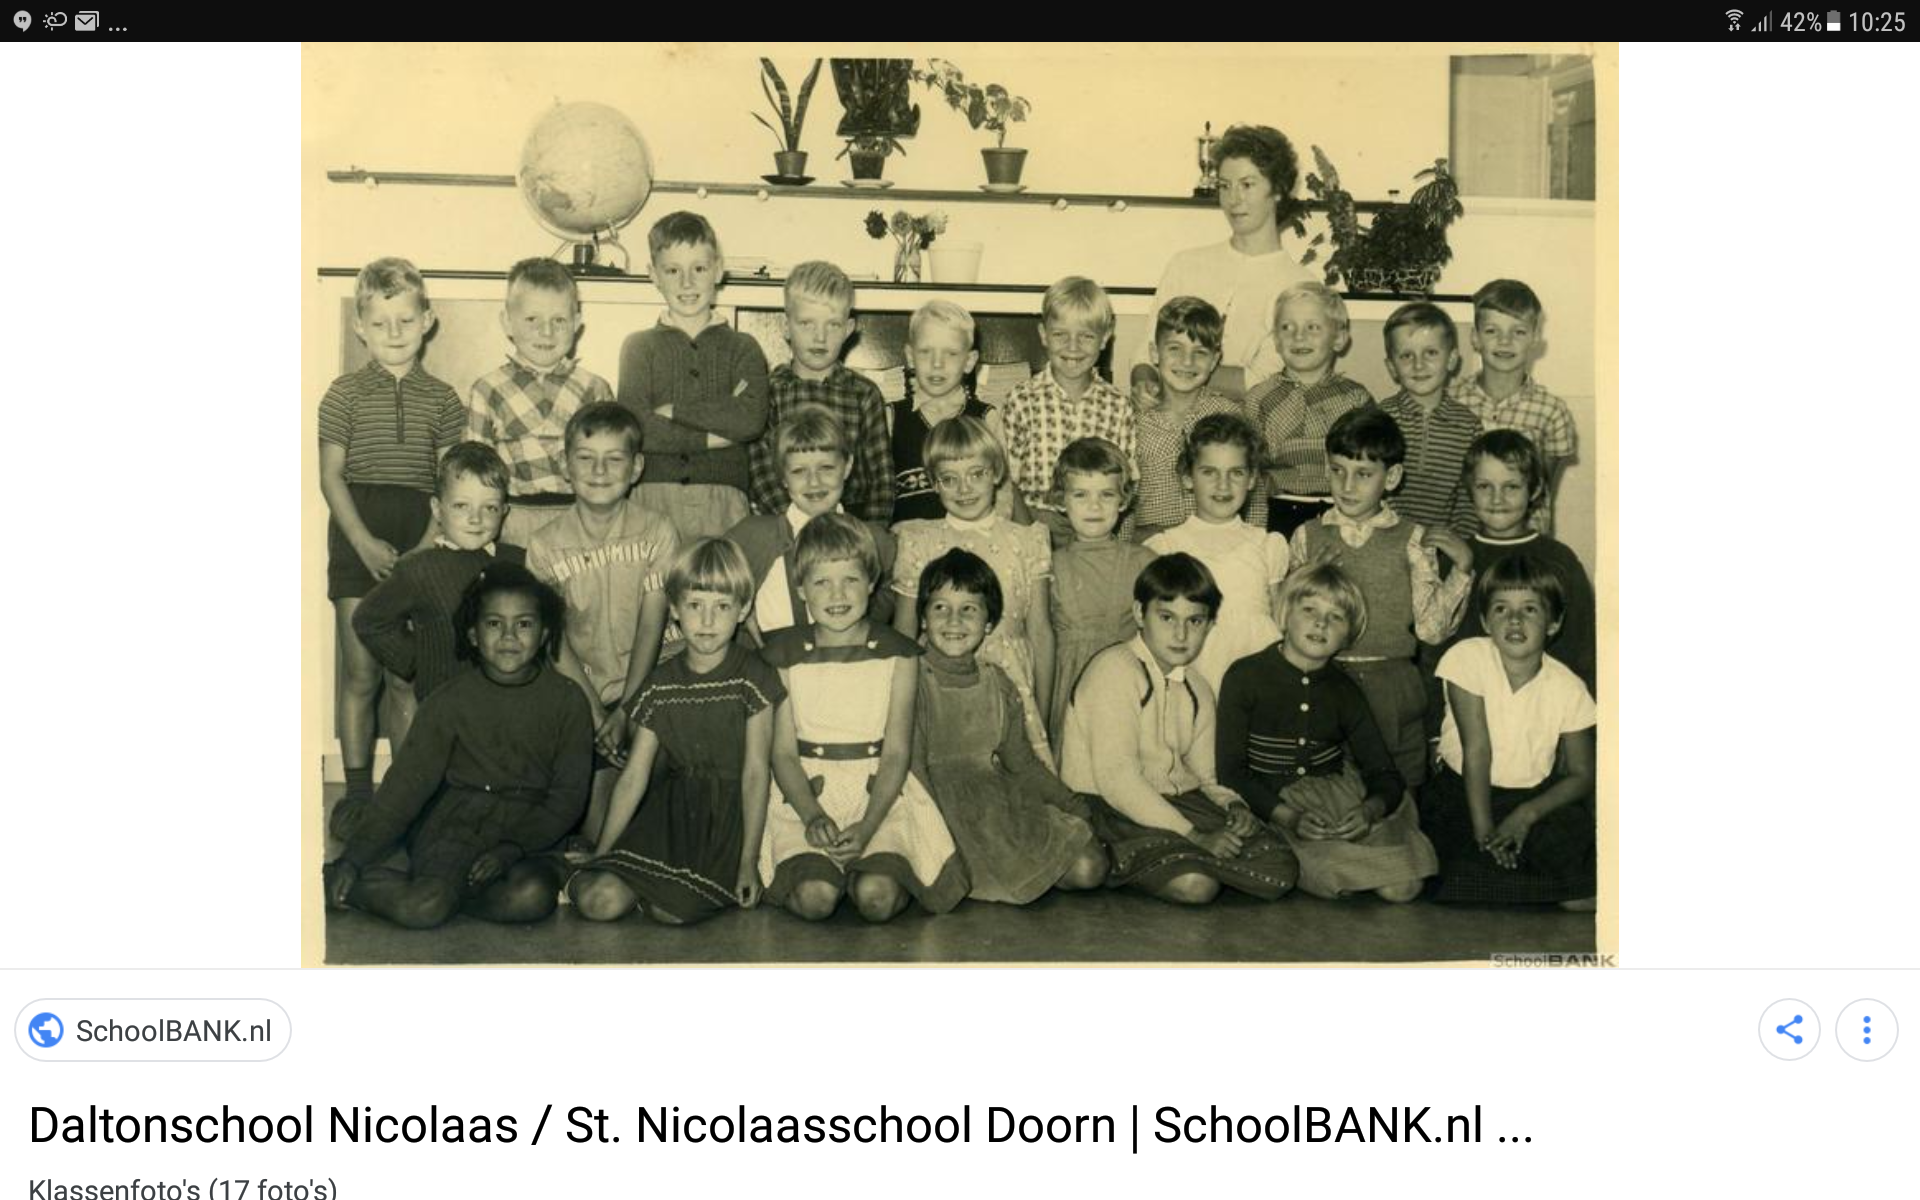 Daltonschool  Nicolaas / St. Nicolaasschool foto